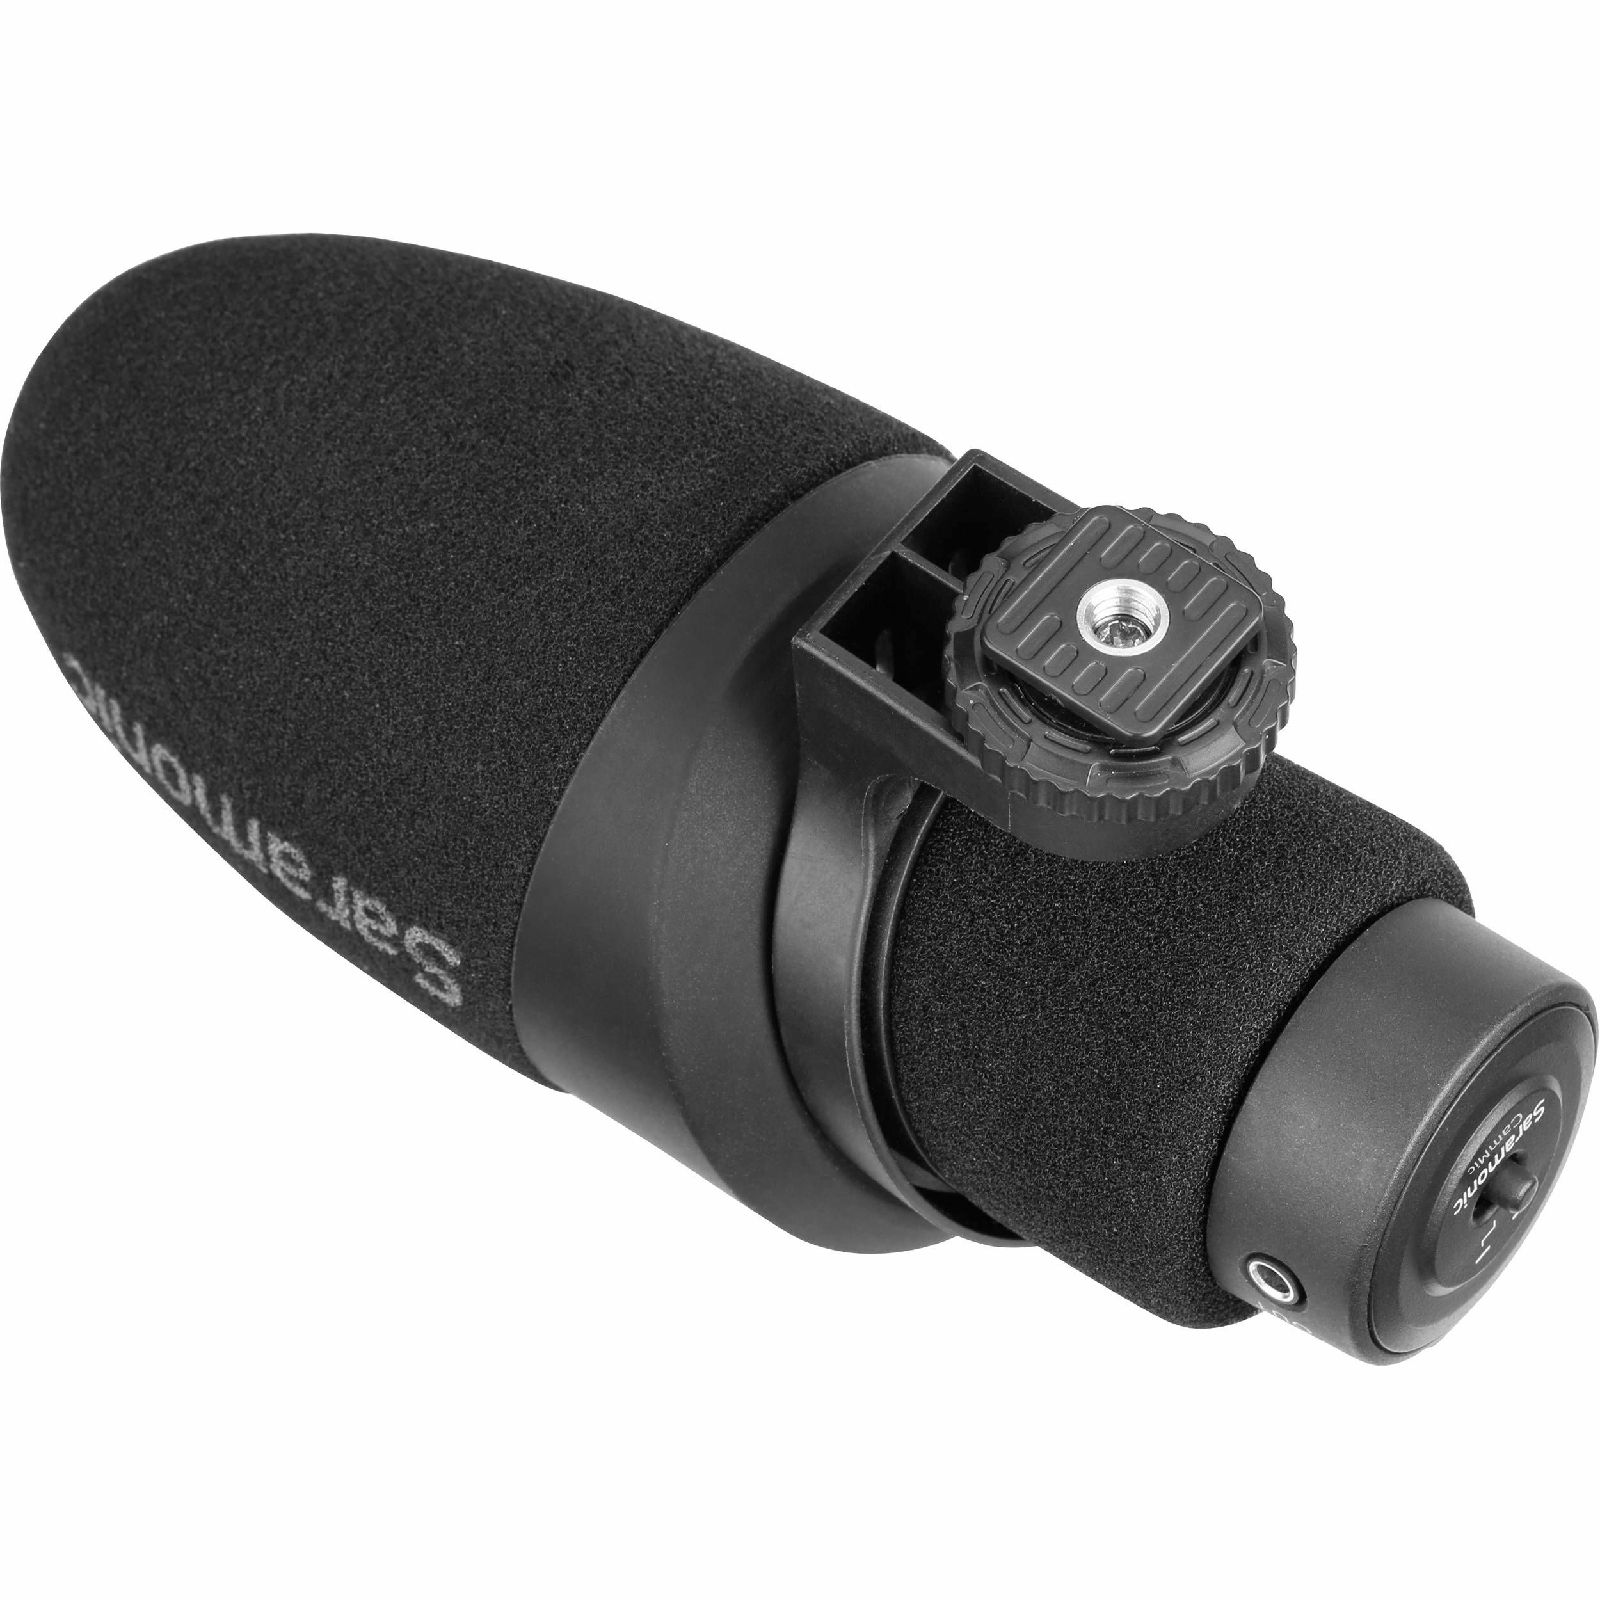 Saramonic CamMic Lightweight On-Camera Microphone mikrofon za DSLR i smartphone